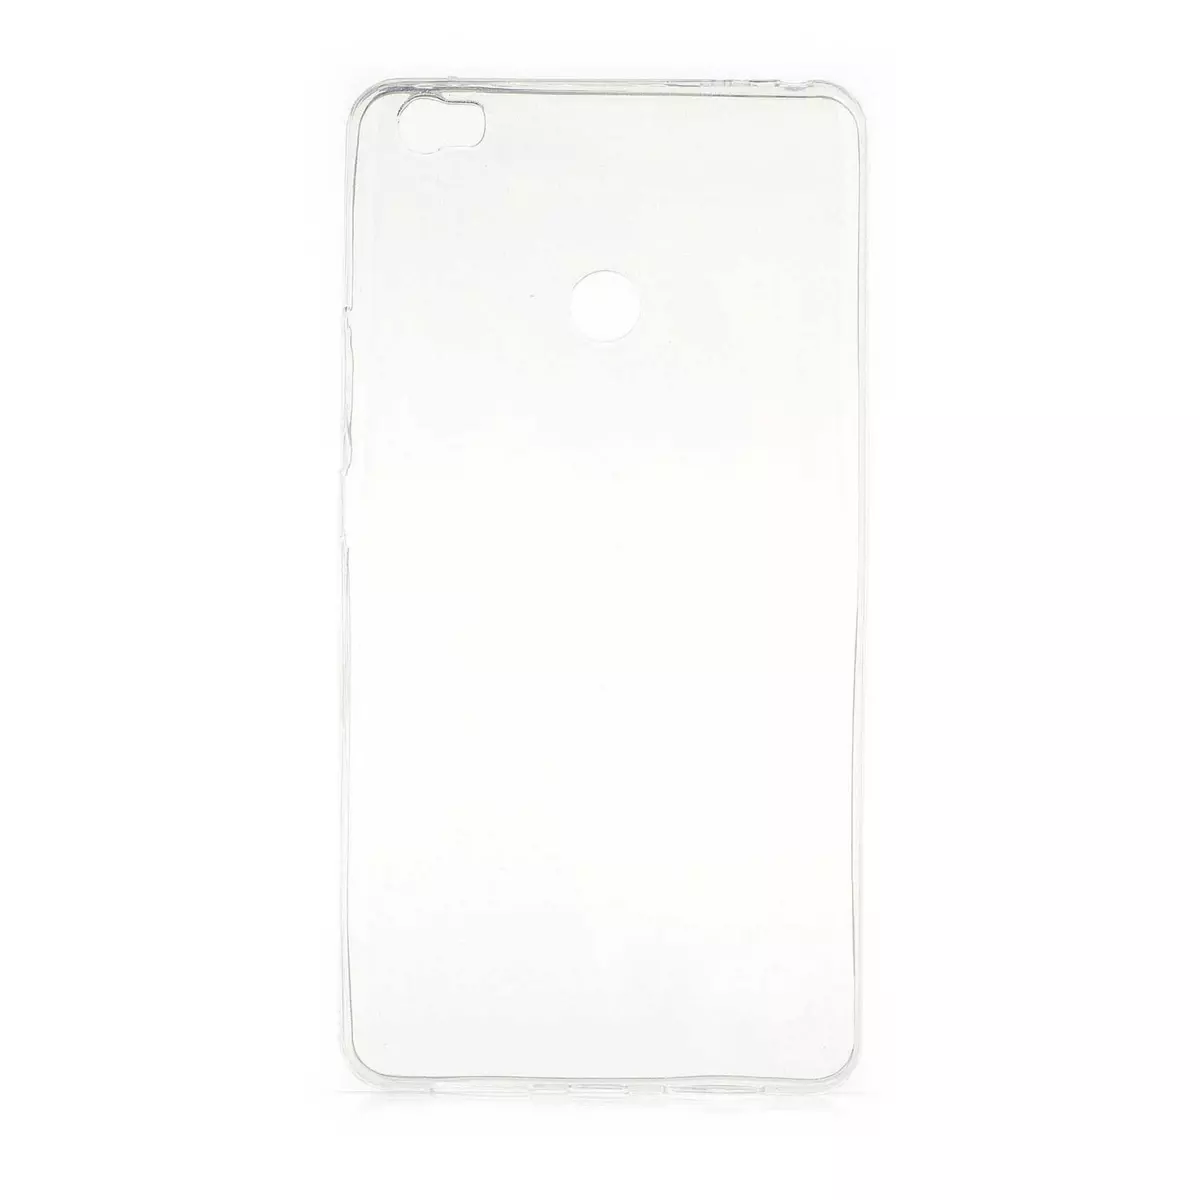 amahousse Coque souple Xiaomi Mi Max transparente ultra fine résistante